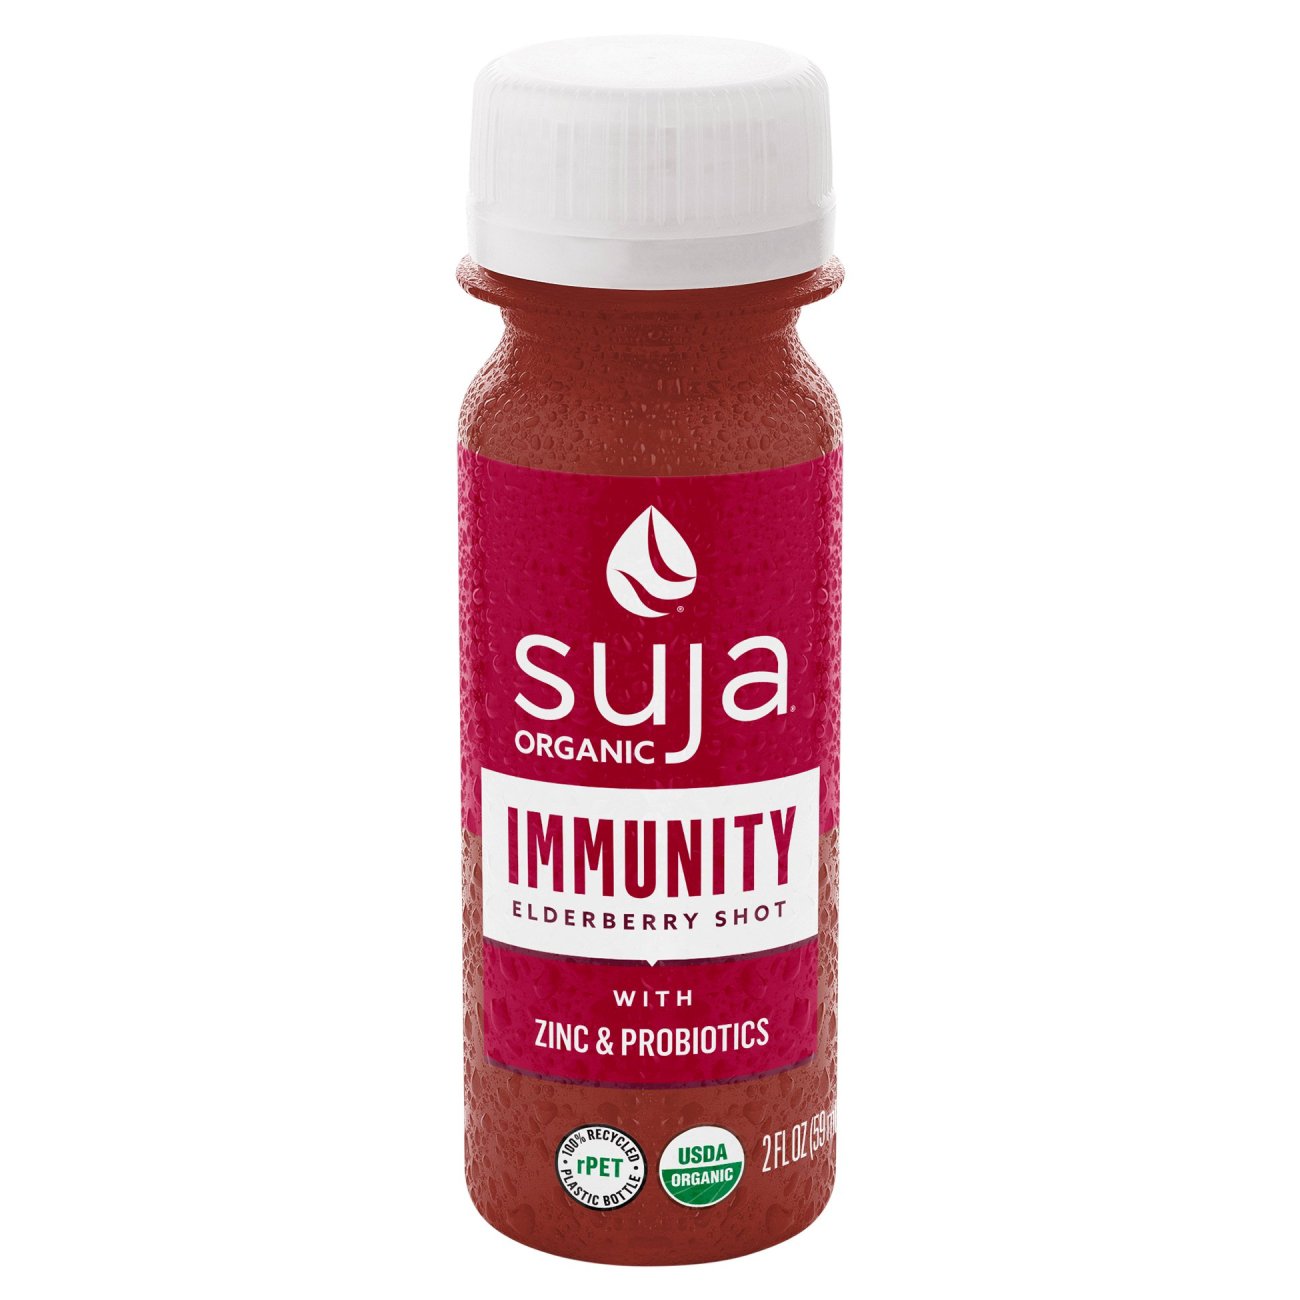 Suja Immunity Rebound Organic ColdPressed Juice Shot Shop Juice at HEB